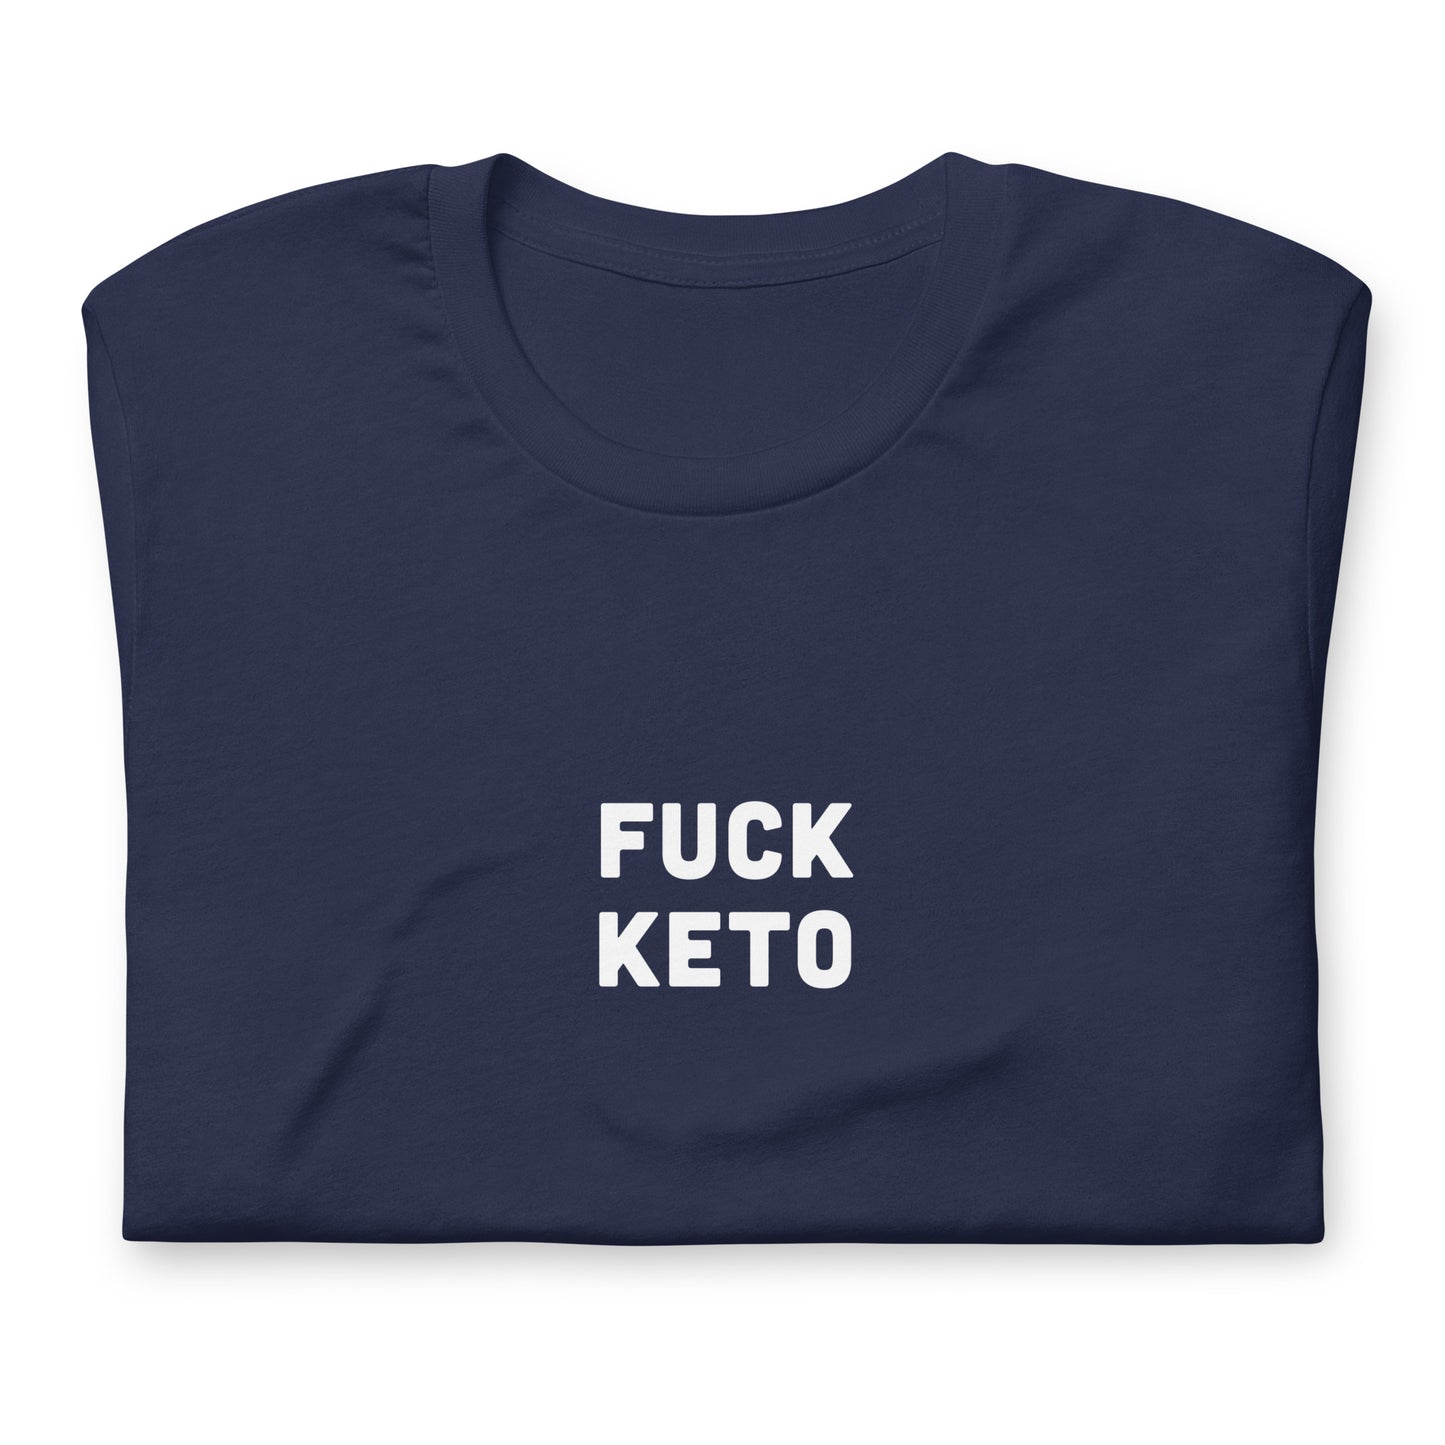 Fuck Keto T-Shirt Size XL Color Black